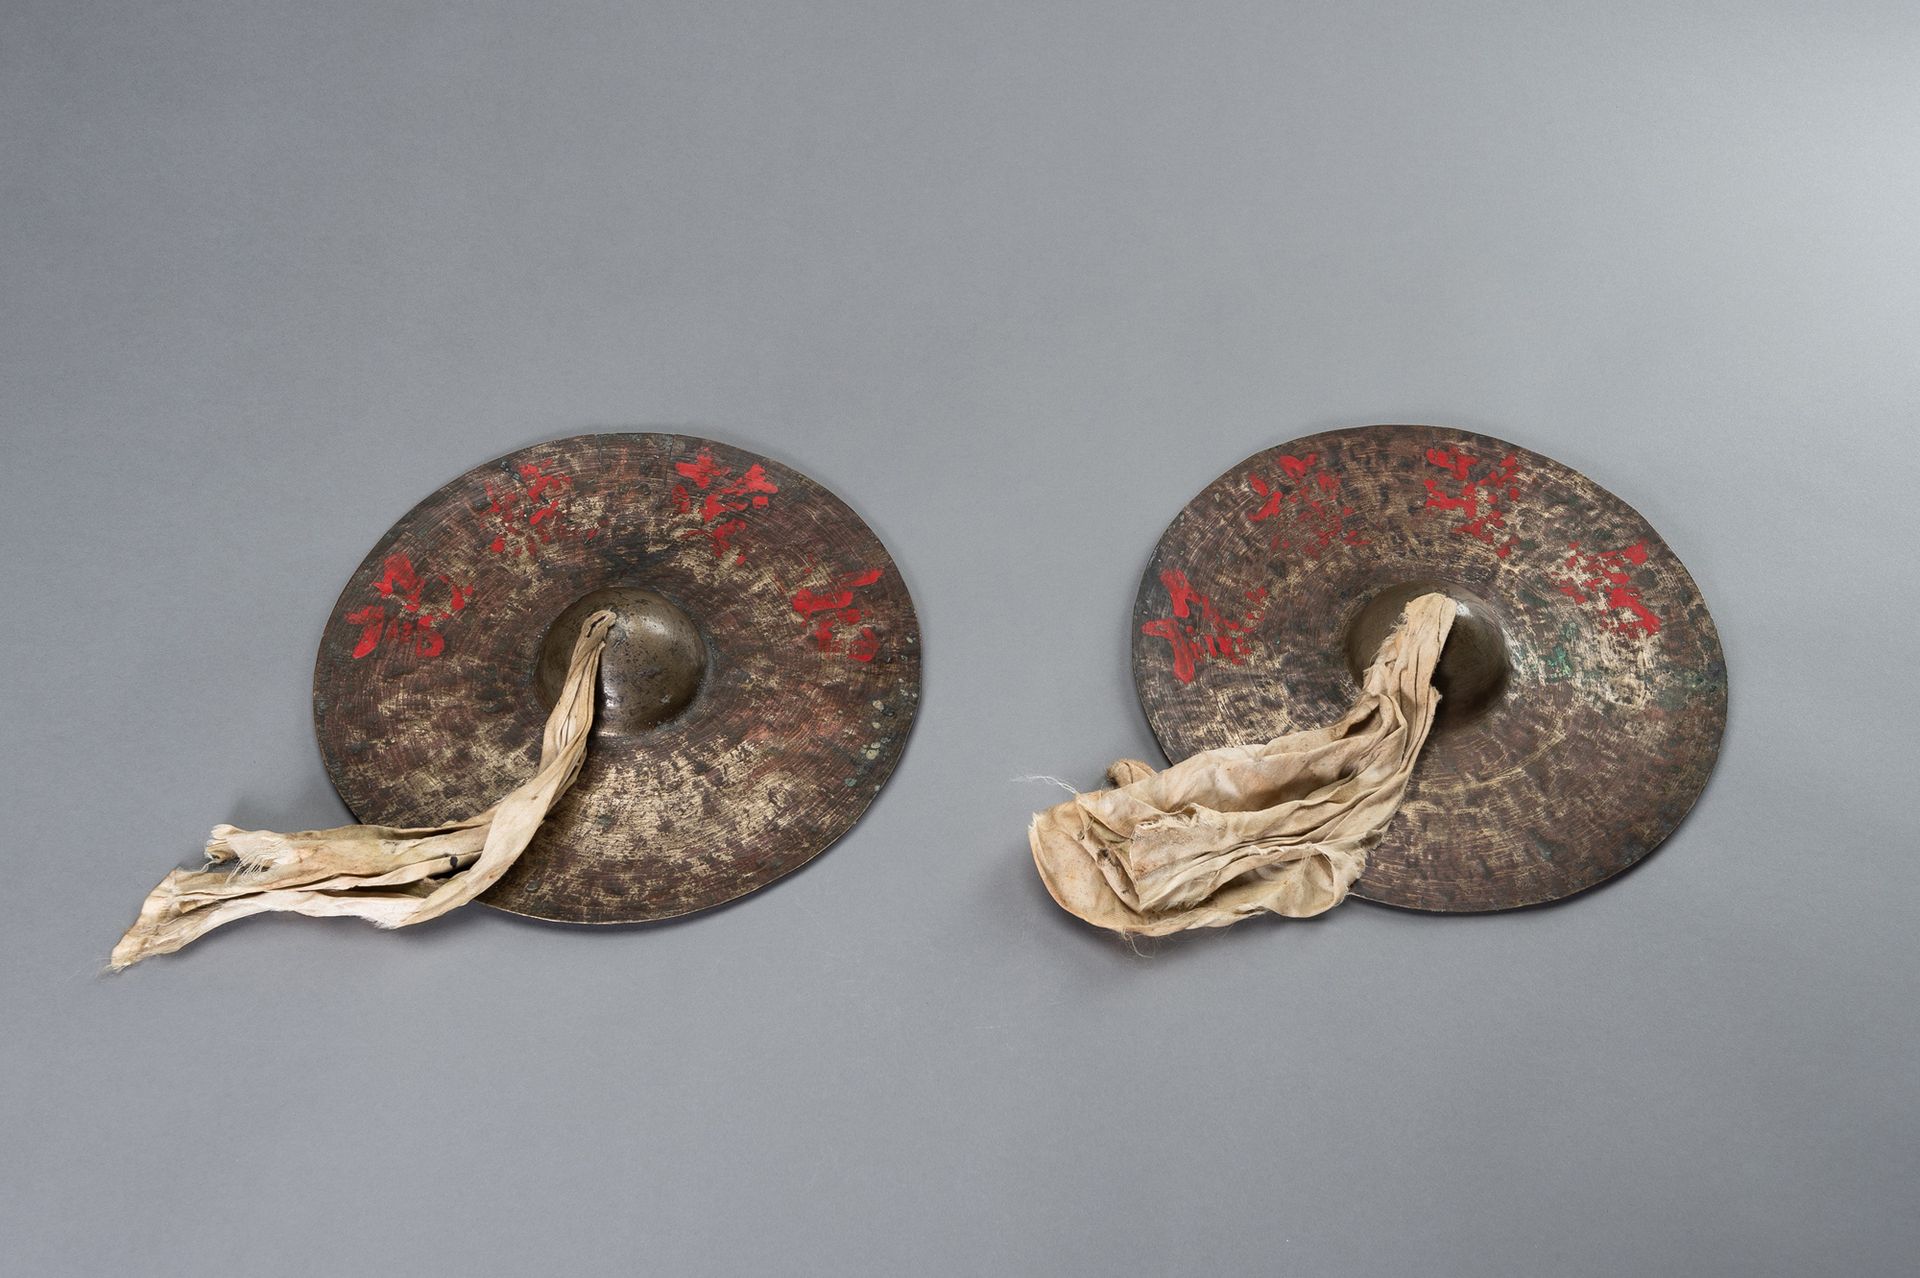 A PAIR OF BRONZE BO CYMBALS Pärchen BO-Zymbale aus Bronze
Tibet, 19. Jahrhundert&hellip;